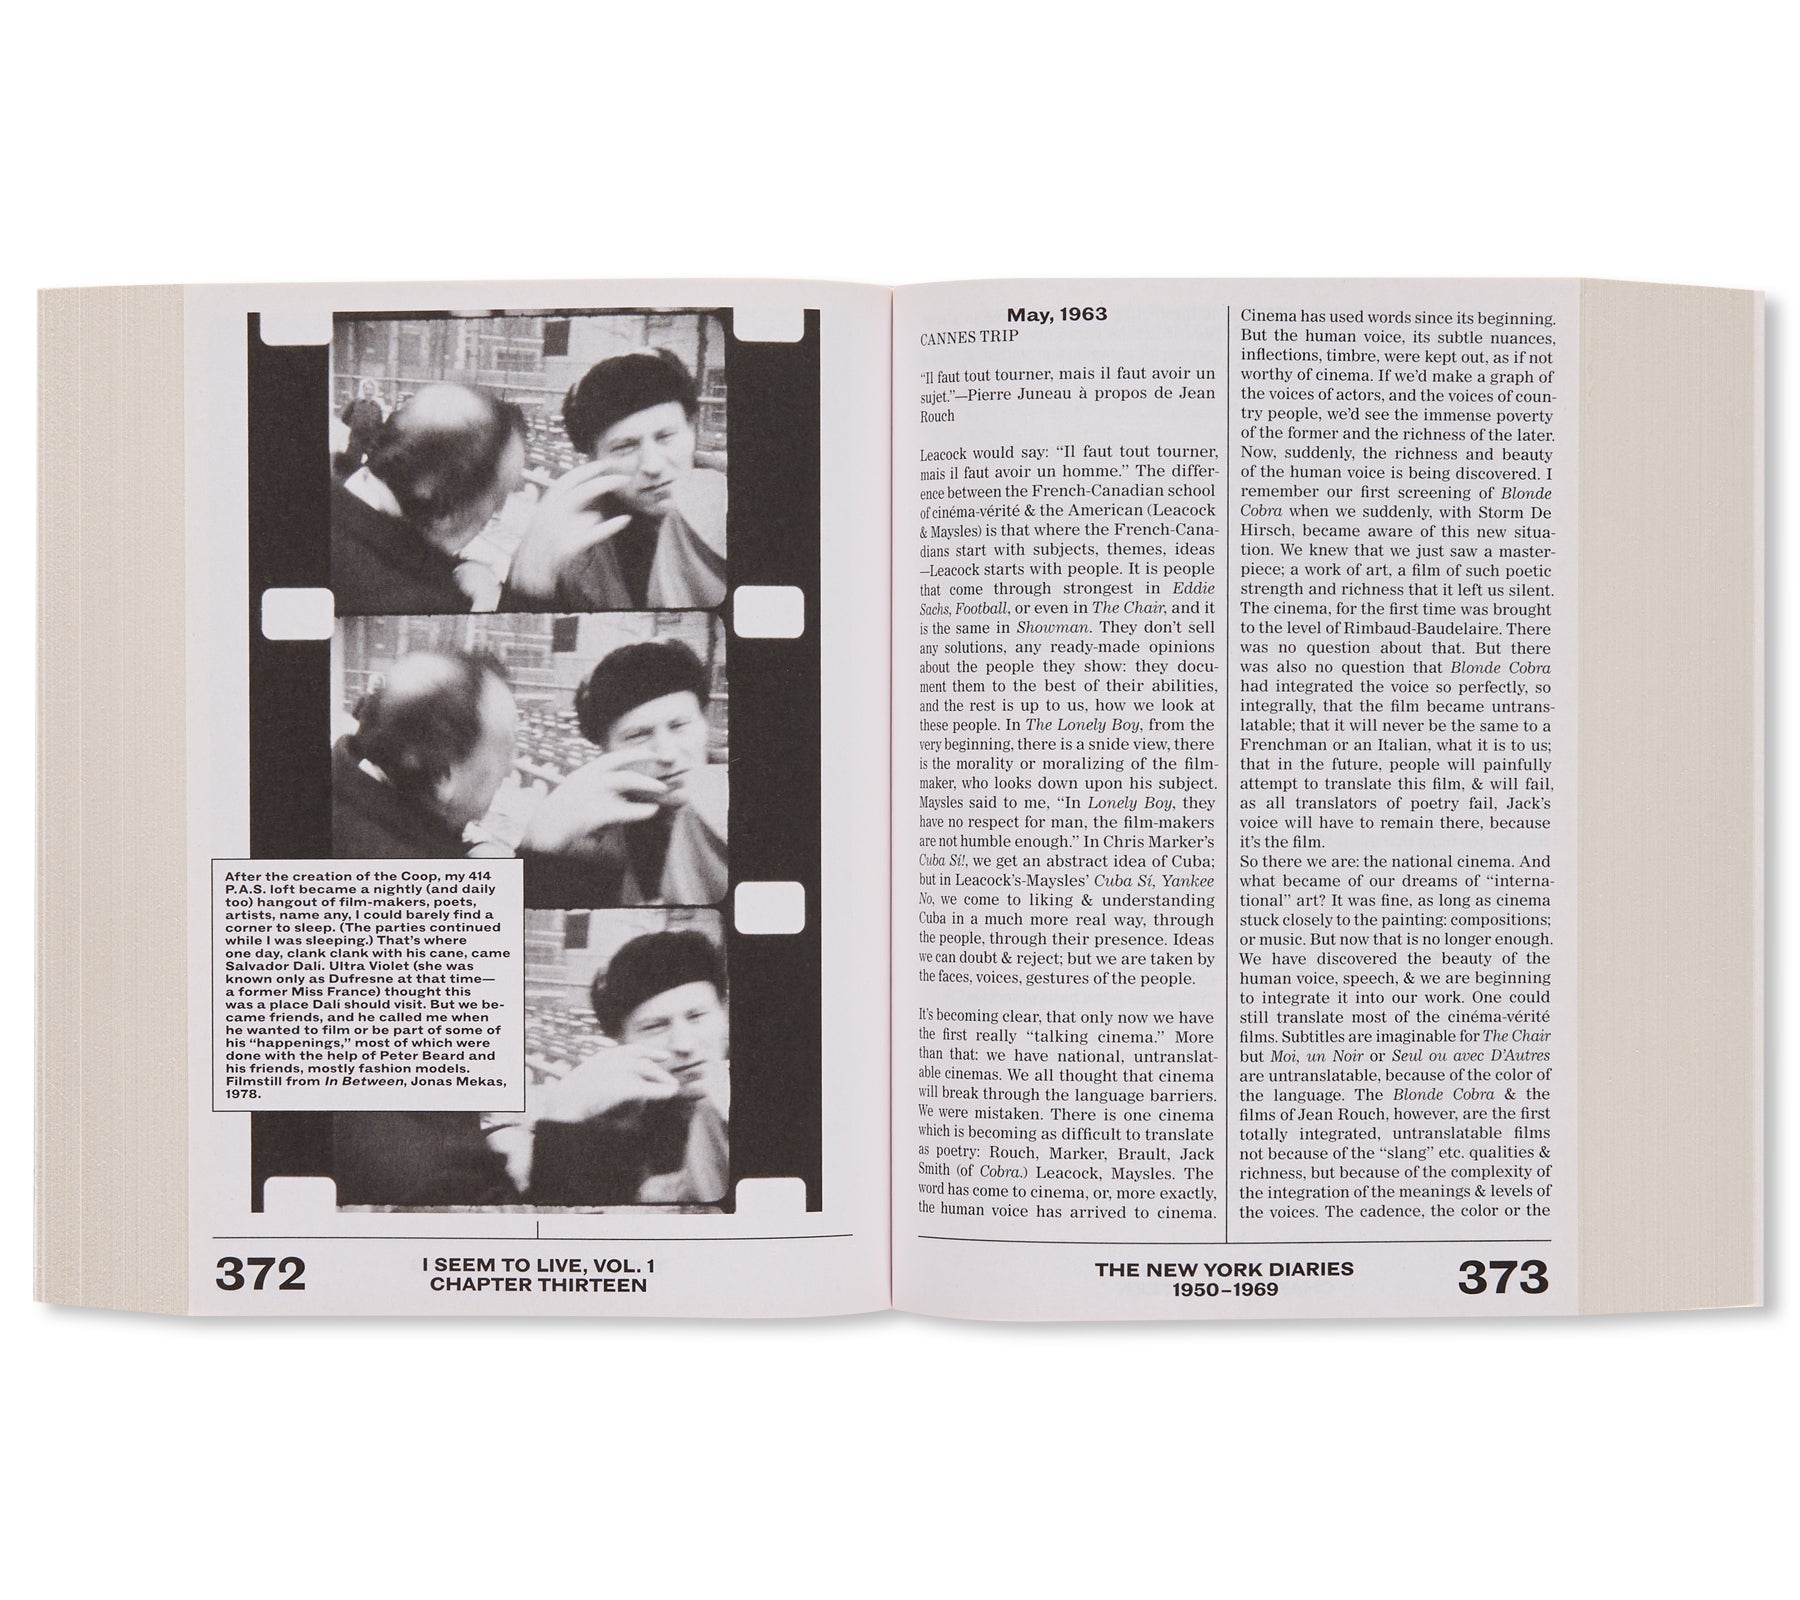 I SEEM TO LIVE - The New York Diaries. vol.1, 1950-1969 by Jonas Mekas